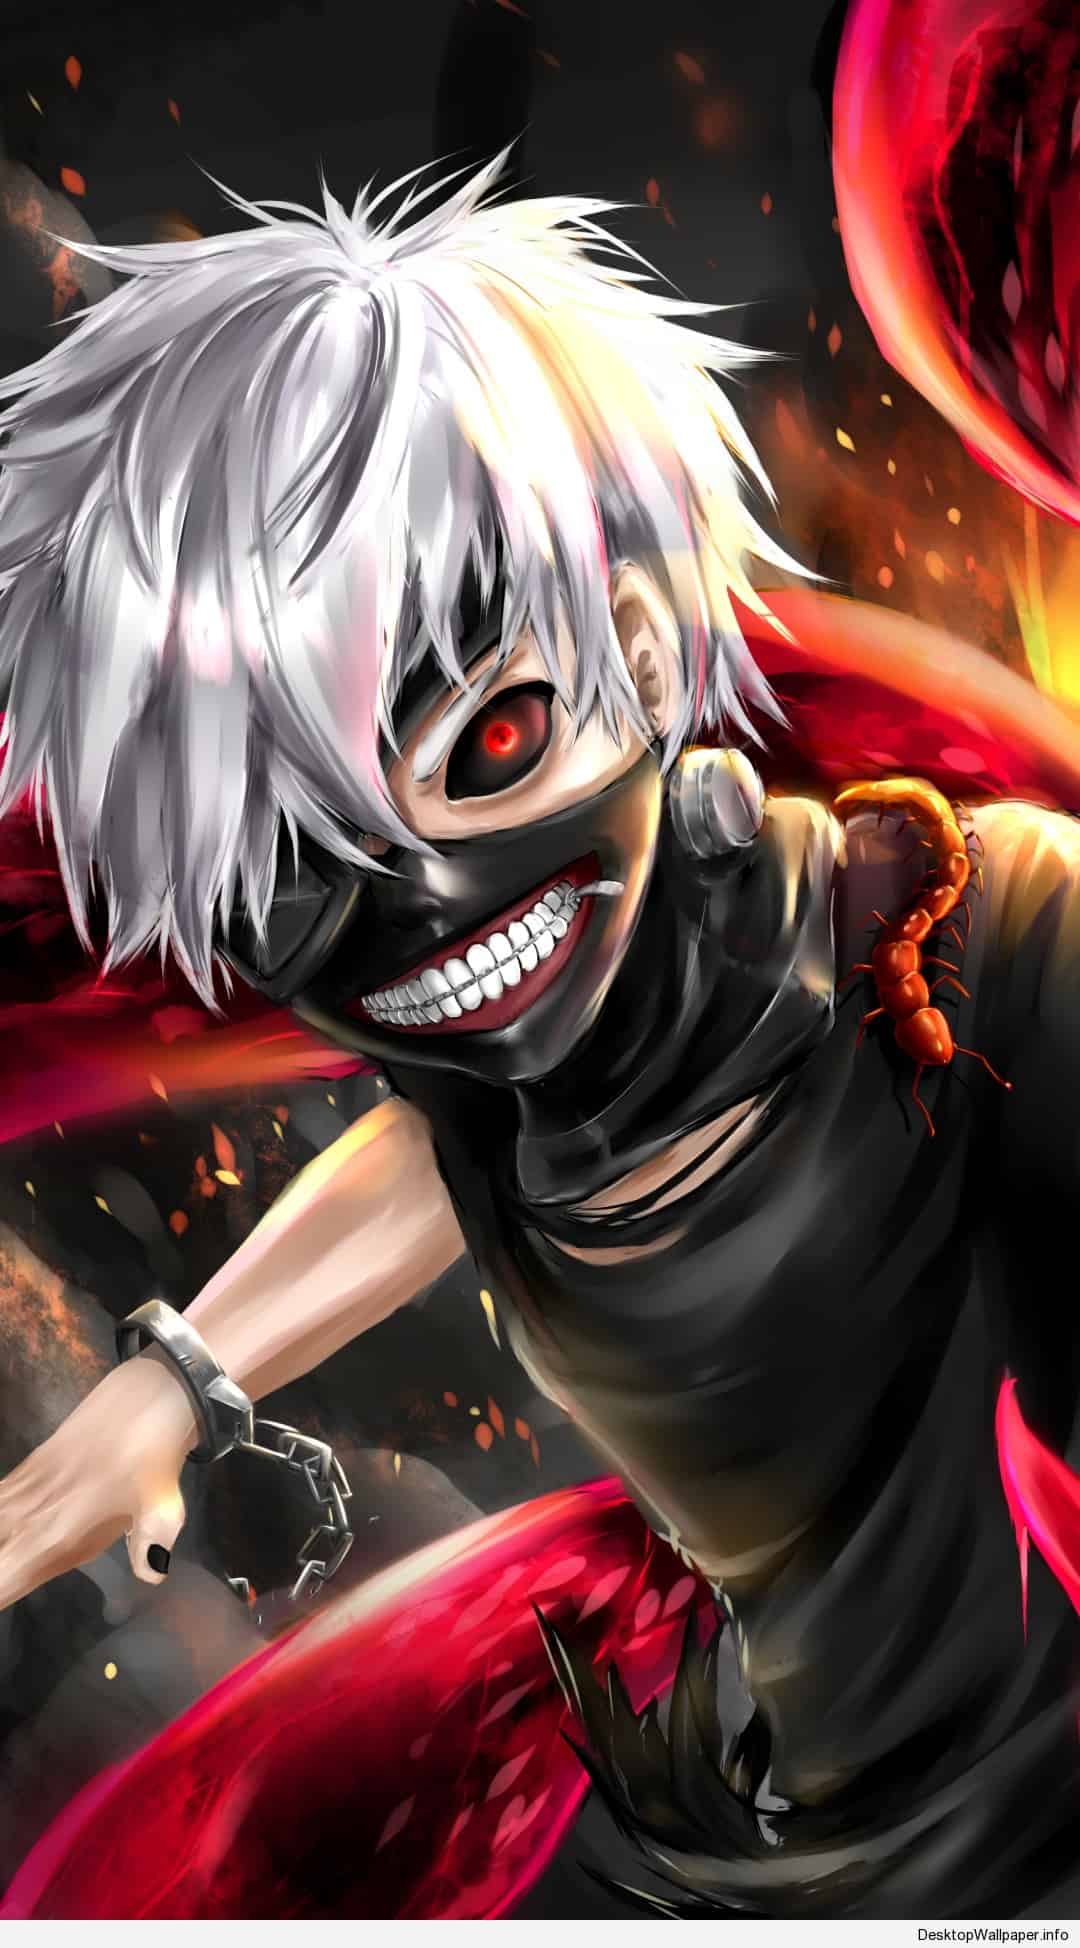 Unduh 4500 Background Anime Tokyo Ghoul HD Terbaru